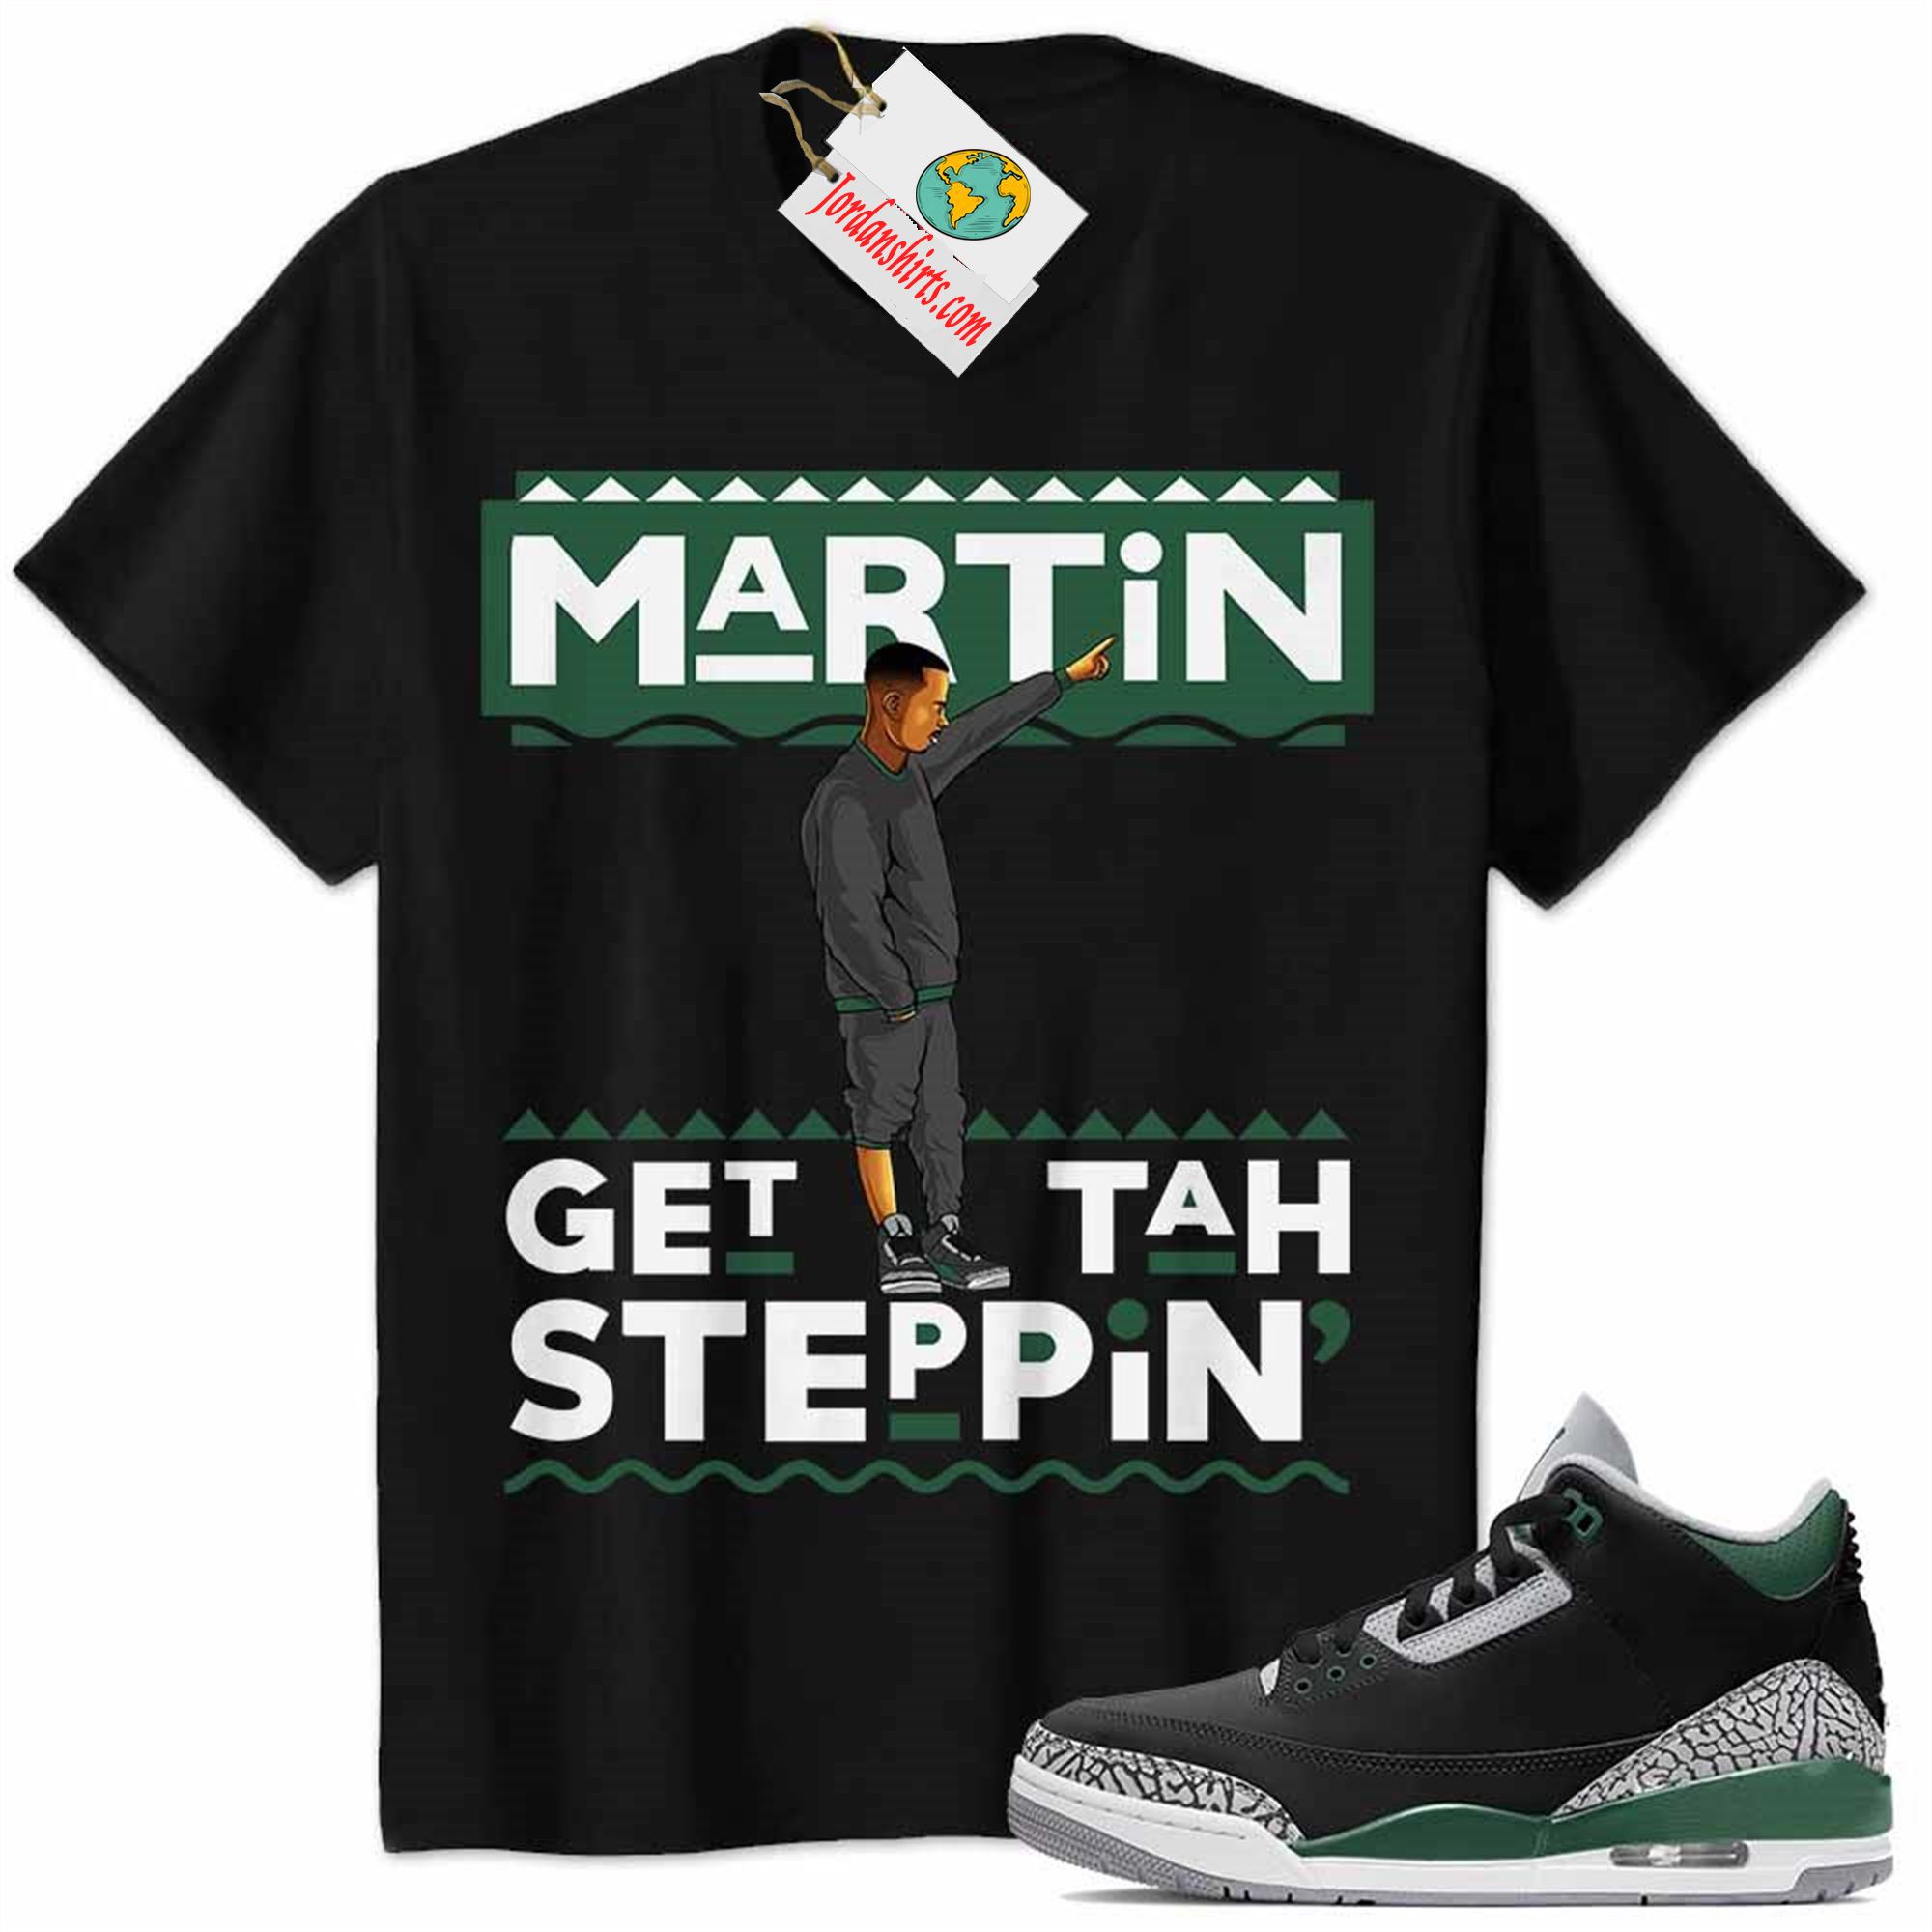 Jordan 3 Shirt, Jordan 3 Pine Green Shirt Martin Get Tah Steppin Black Full Size Up To 5xl